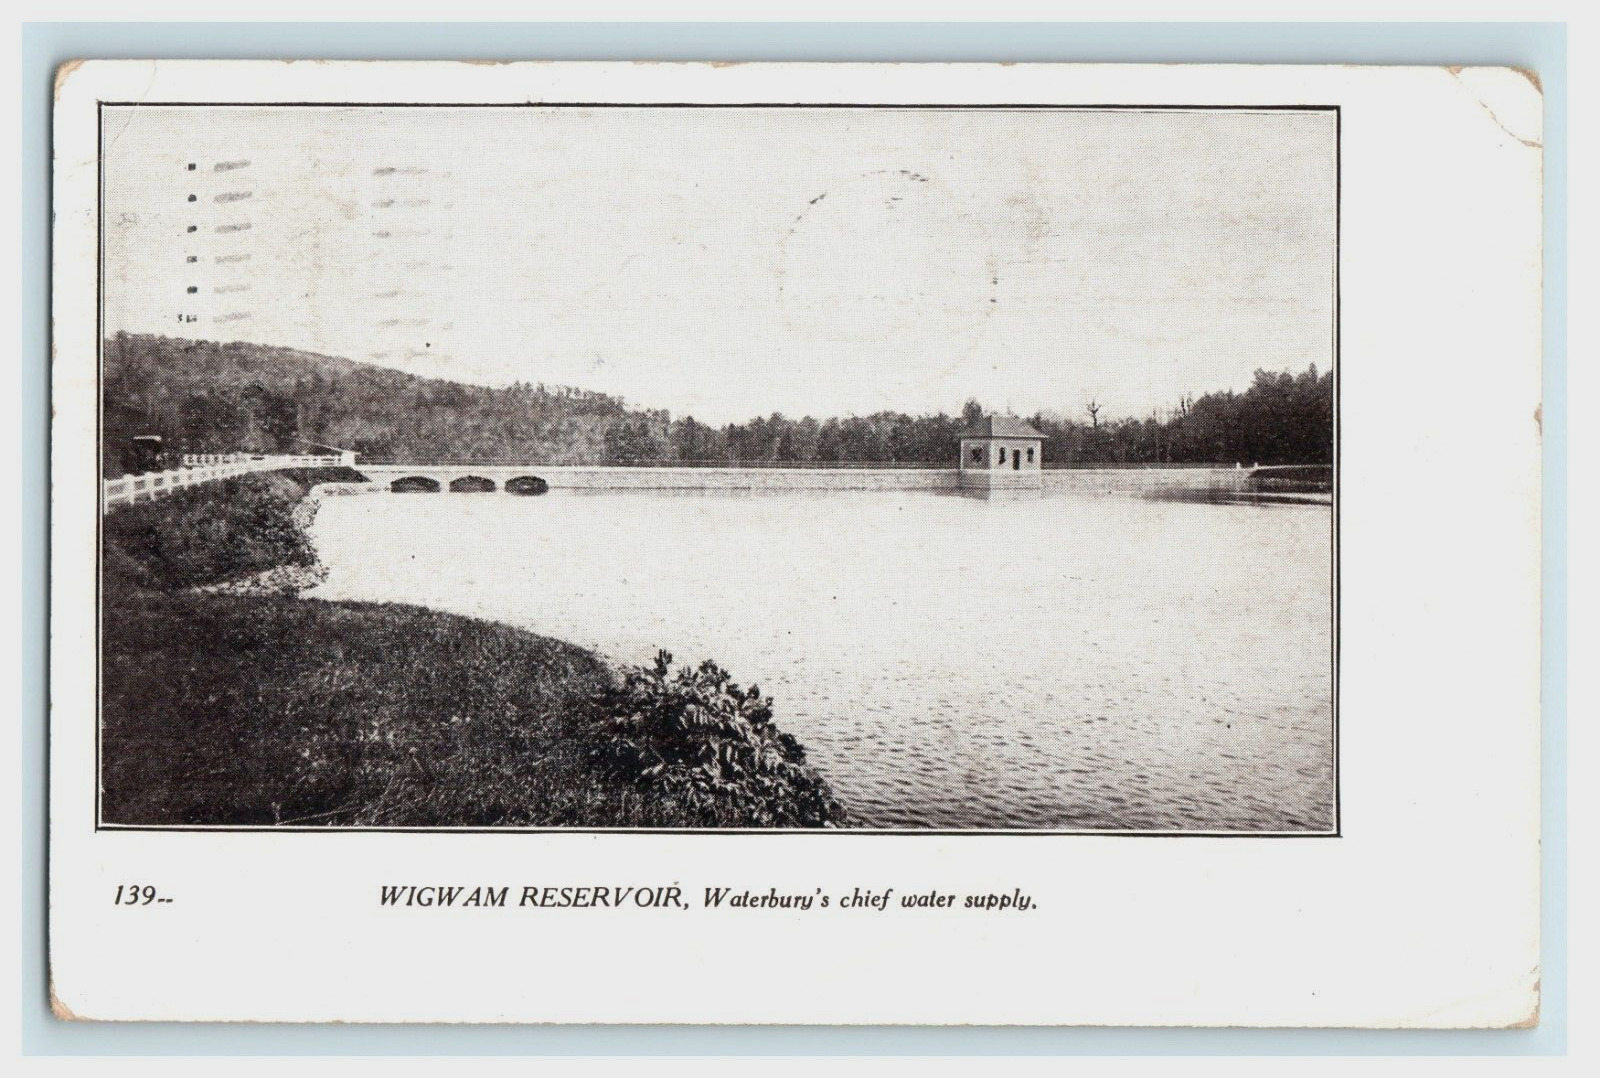 1911 Wigwam Reservoir Waterbury CT Chief Water Supply View Posted